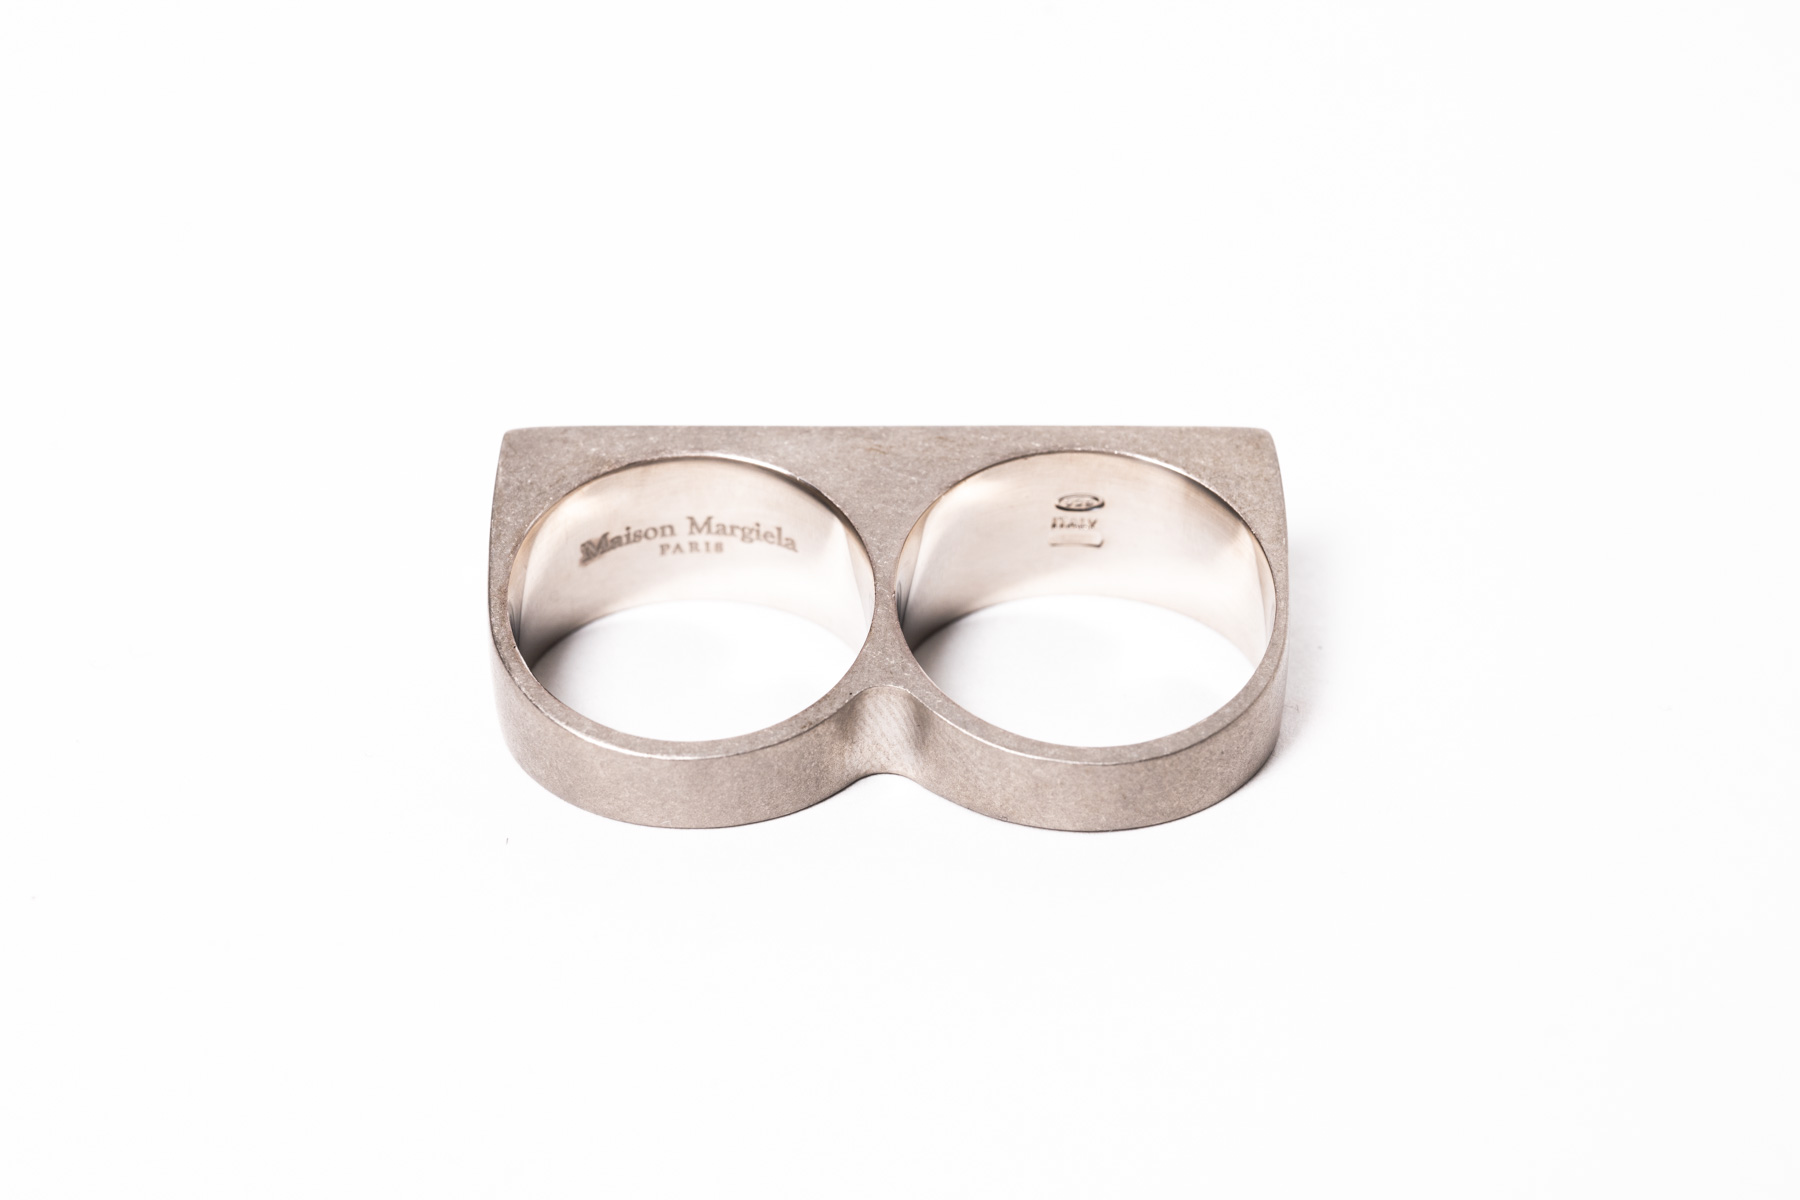 Maison Margiela Silver Ring AUTUMN WINTER 2020 | HUES 福岡セレクト 